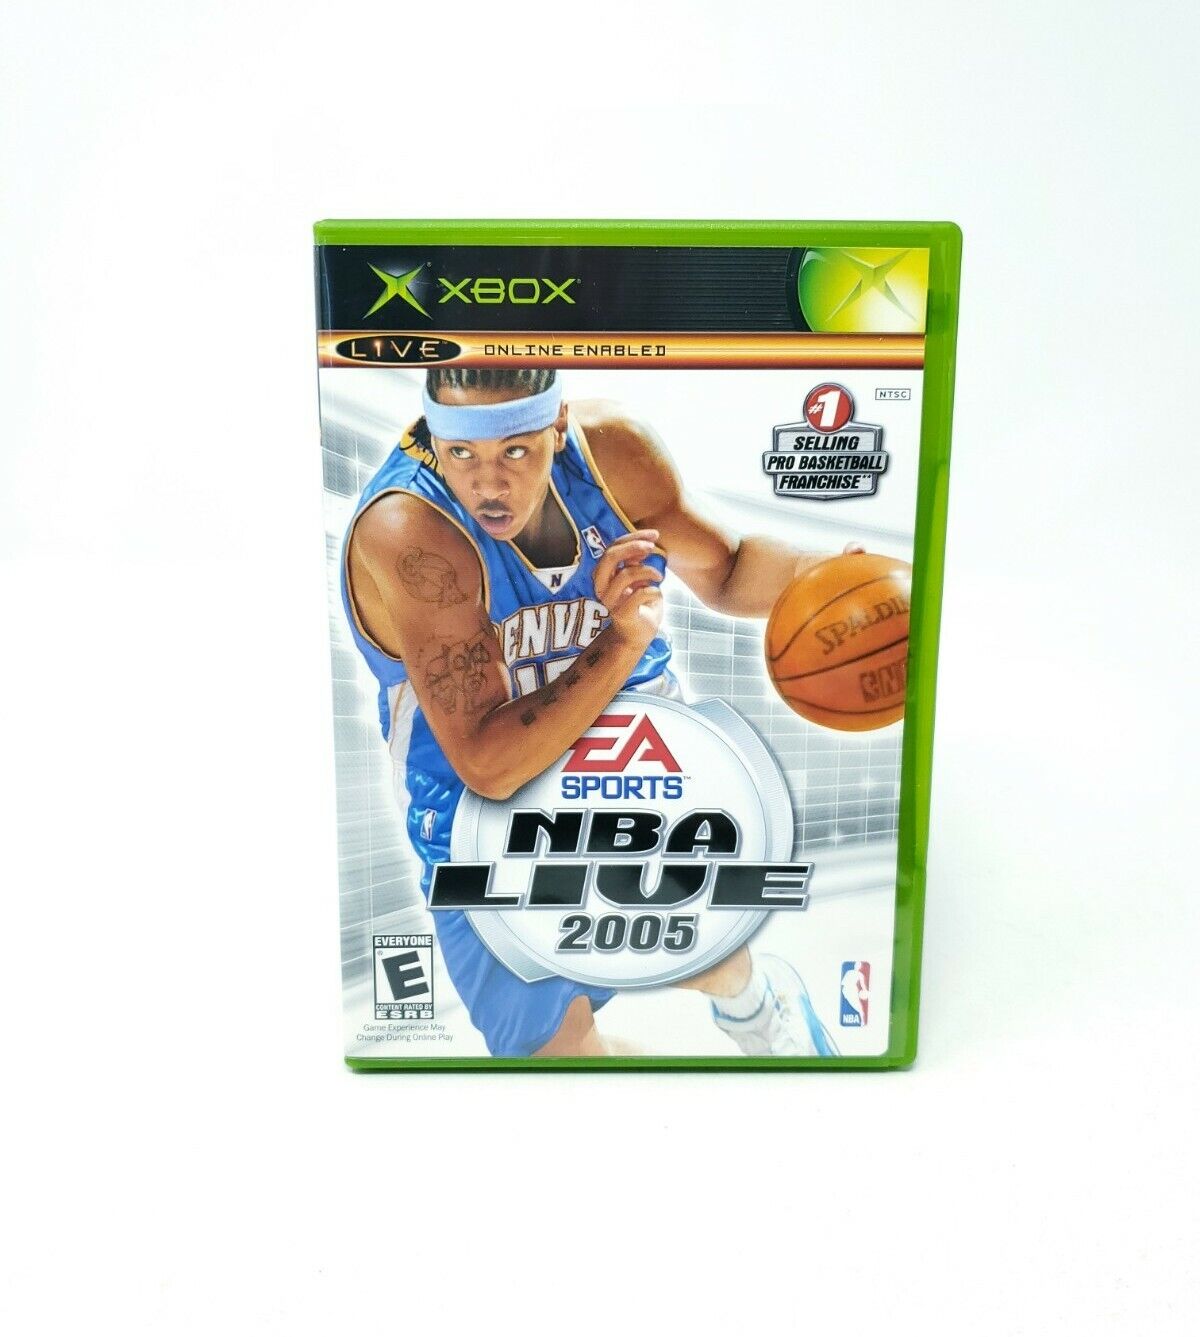 NBA Live 2005 (Microsoft Xbox) 14633148060 eBay